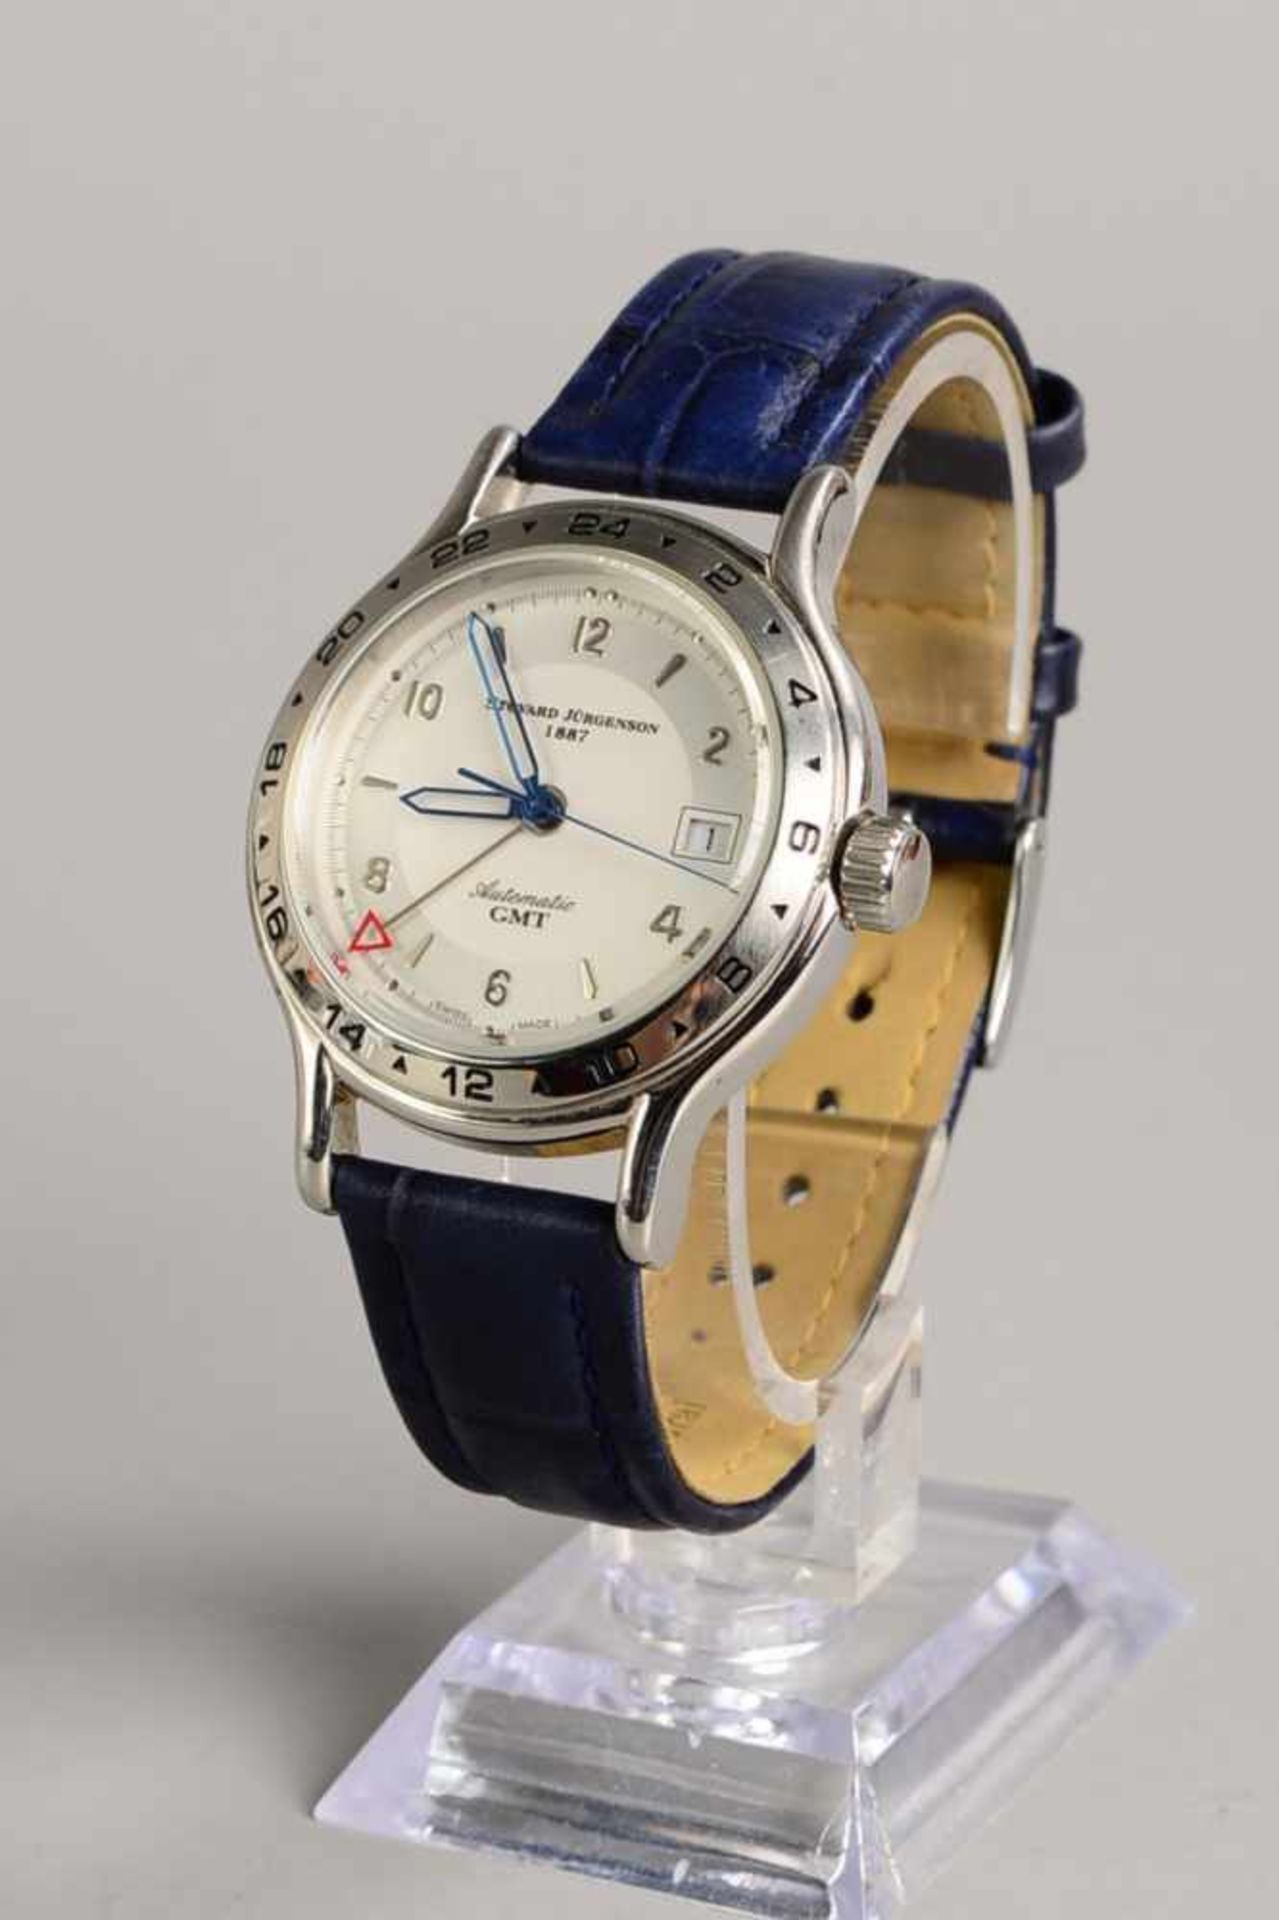 Herren-Armbanduhr, Stovard Jürgenson, Automatic, läuft; an blauem Leder-Armband, im original Kasten - Bild 2 aus 2